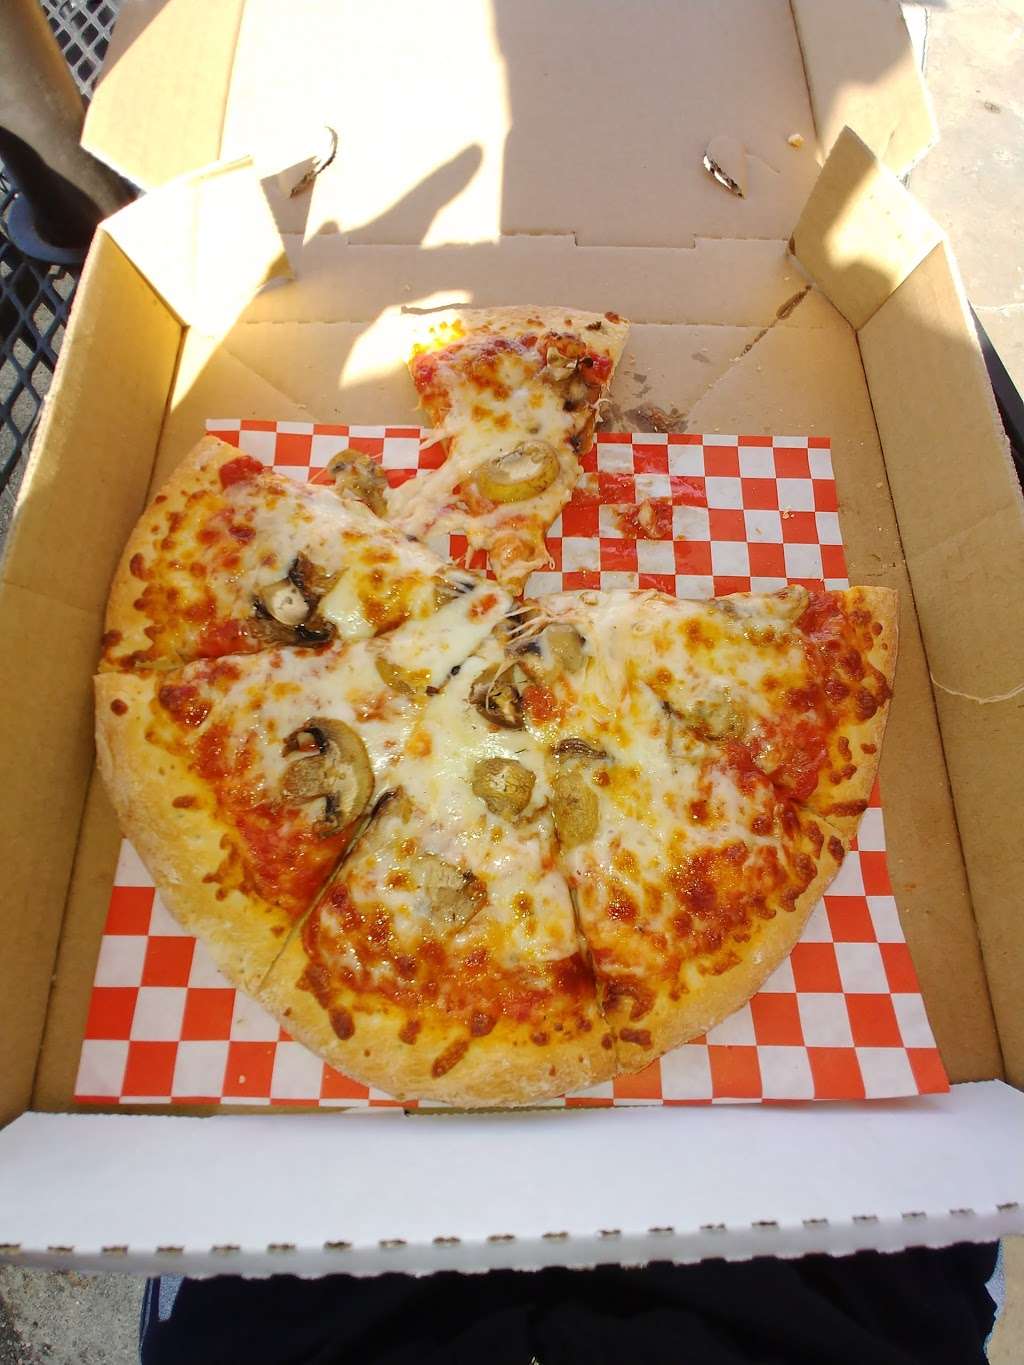 LW Pizza | 2201 N Lakewood Blvd, Long Beach, CA 90815, USA | Phone: (562) 494-6900